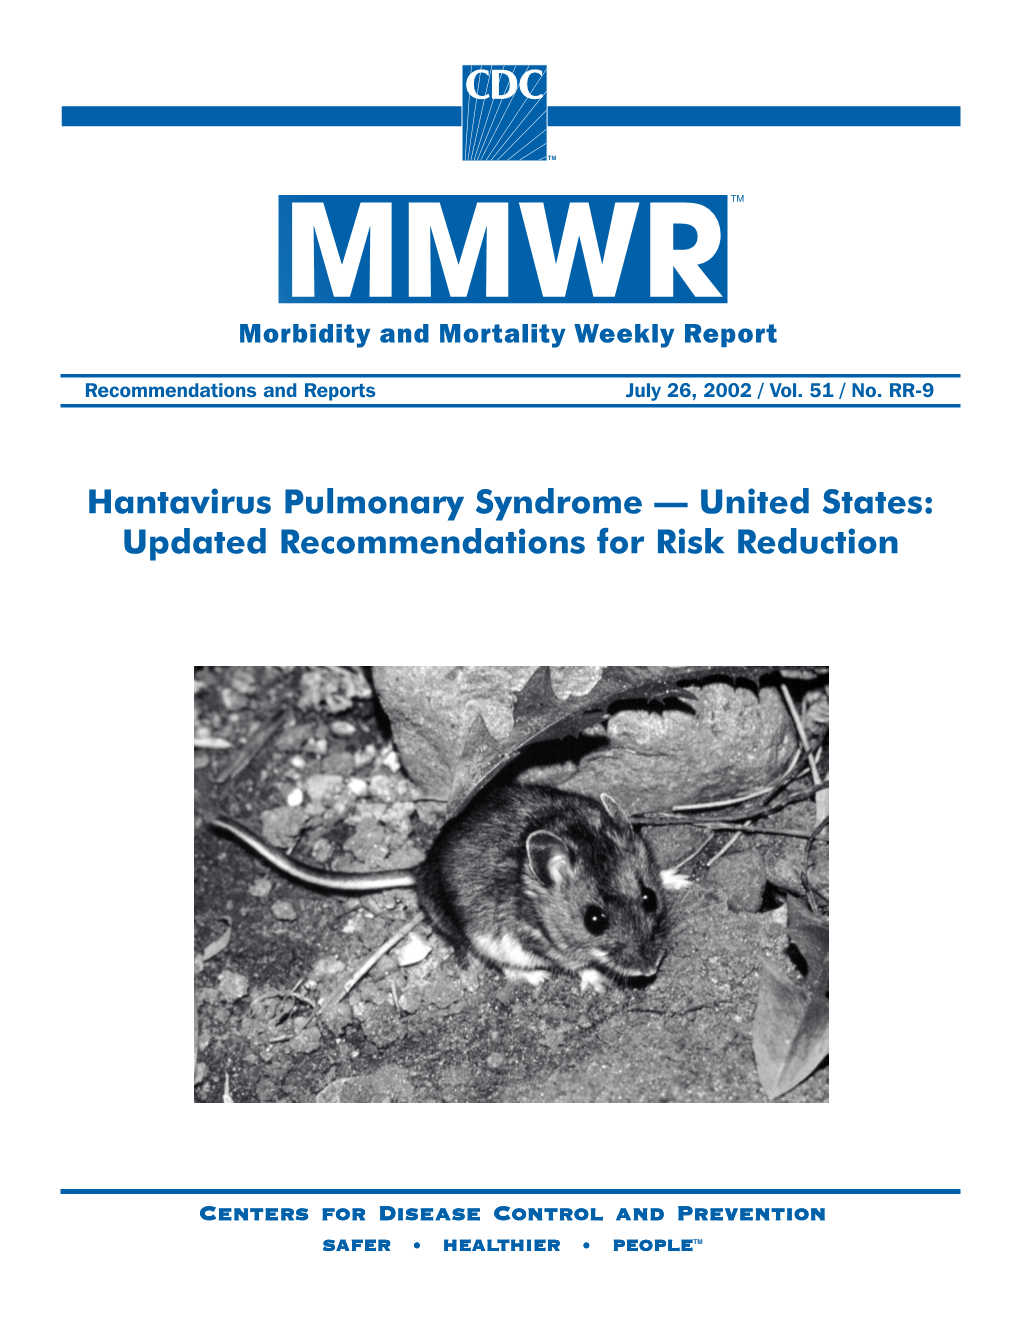 Hantavirus Pulmonary Syndrome- United States